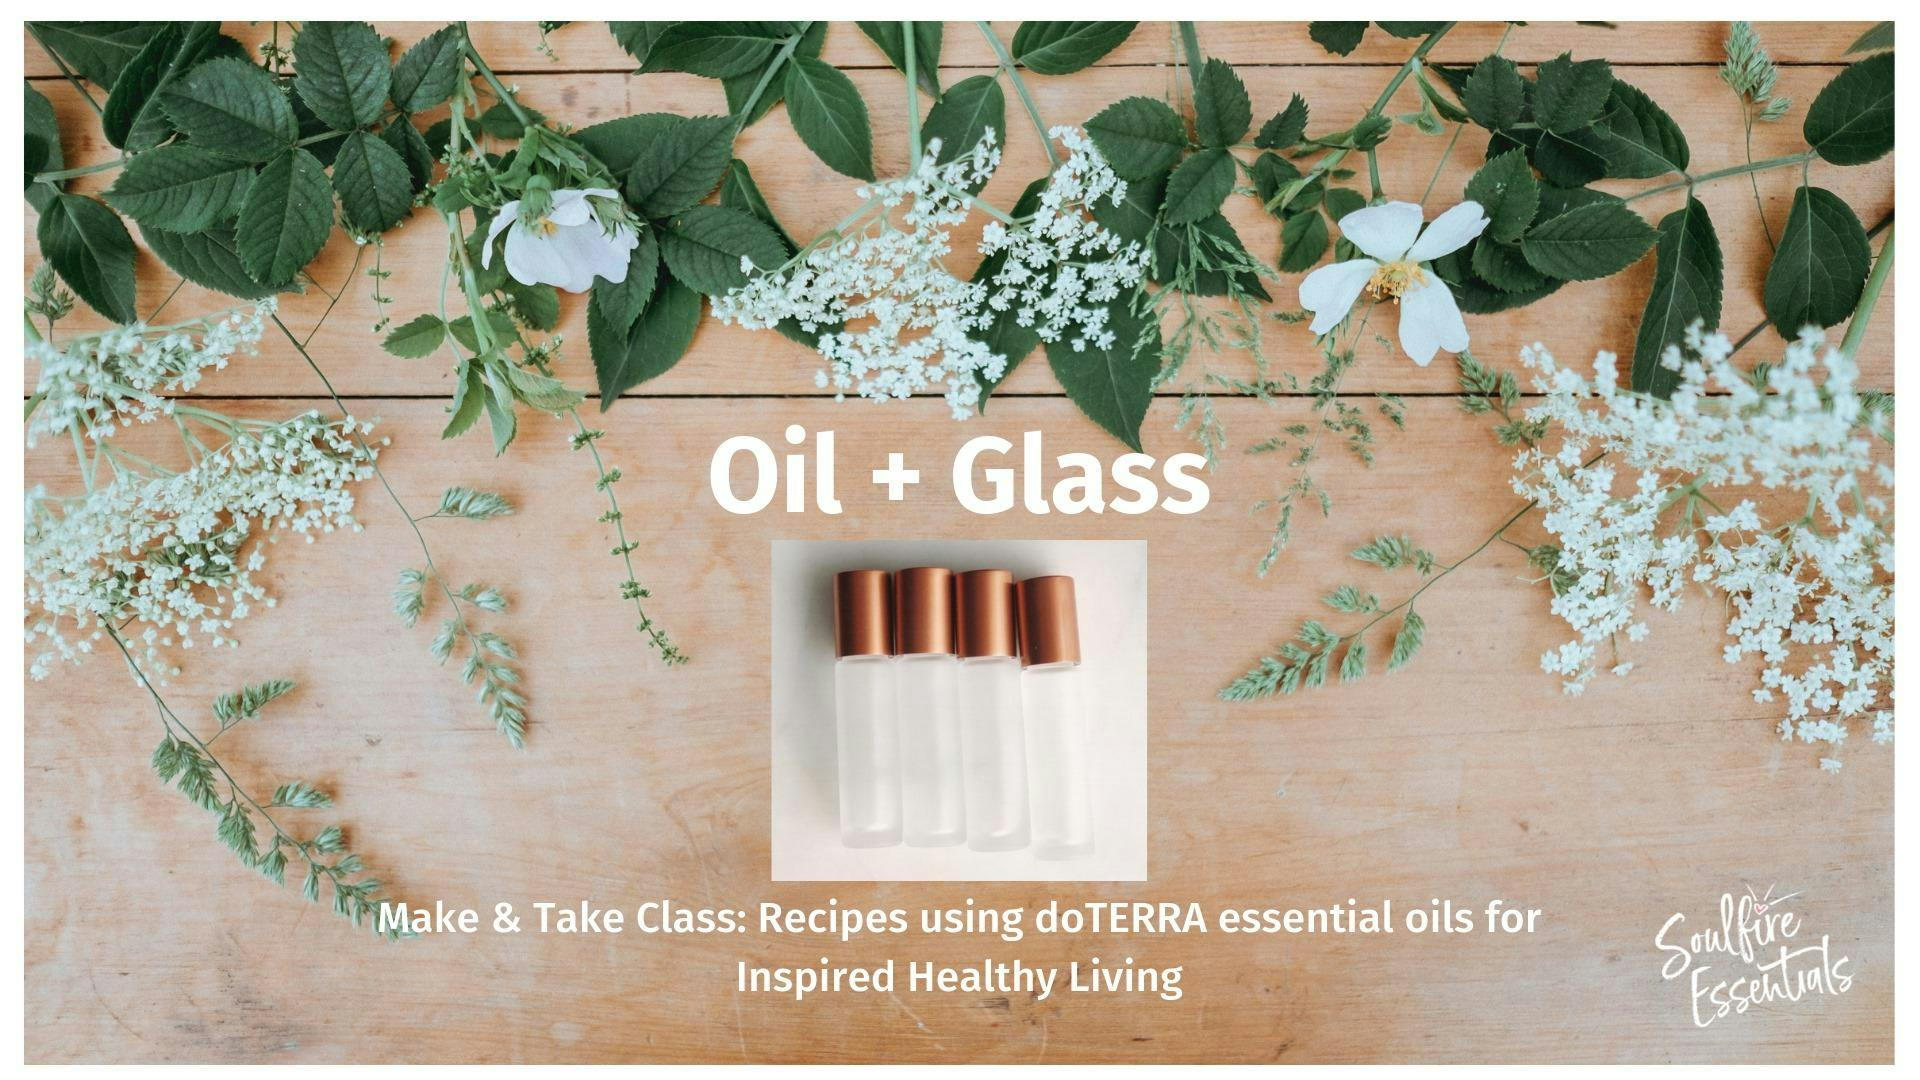 Oil + Glass, Make & Take Class